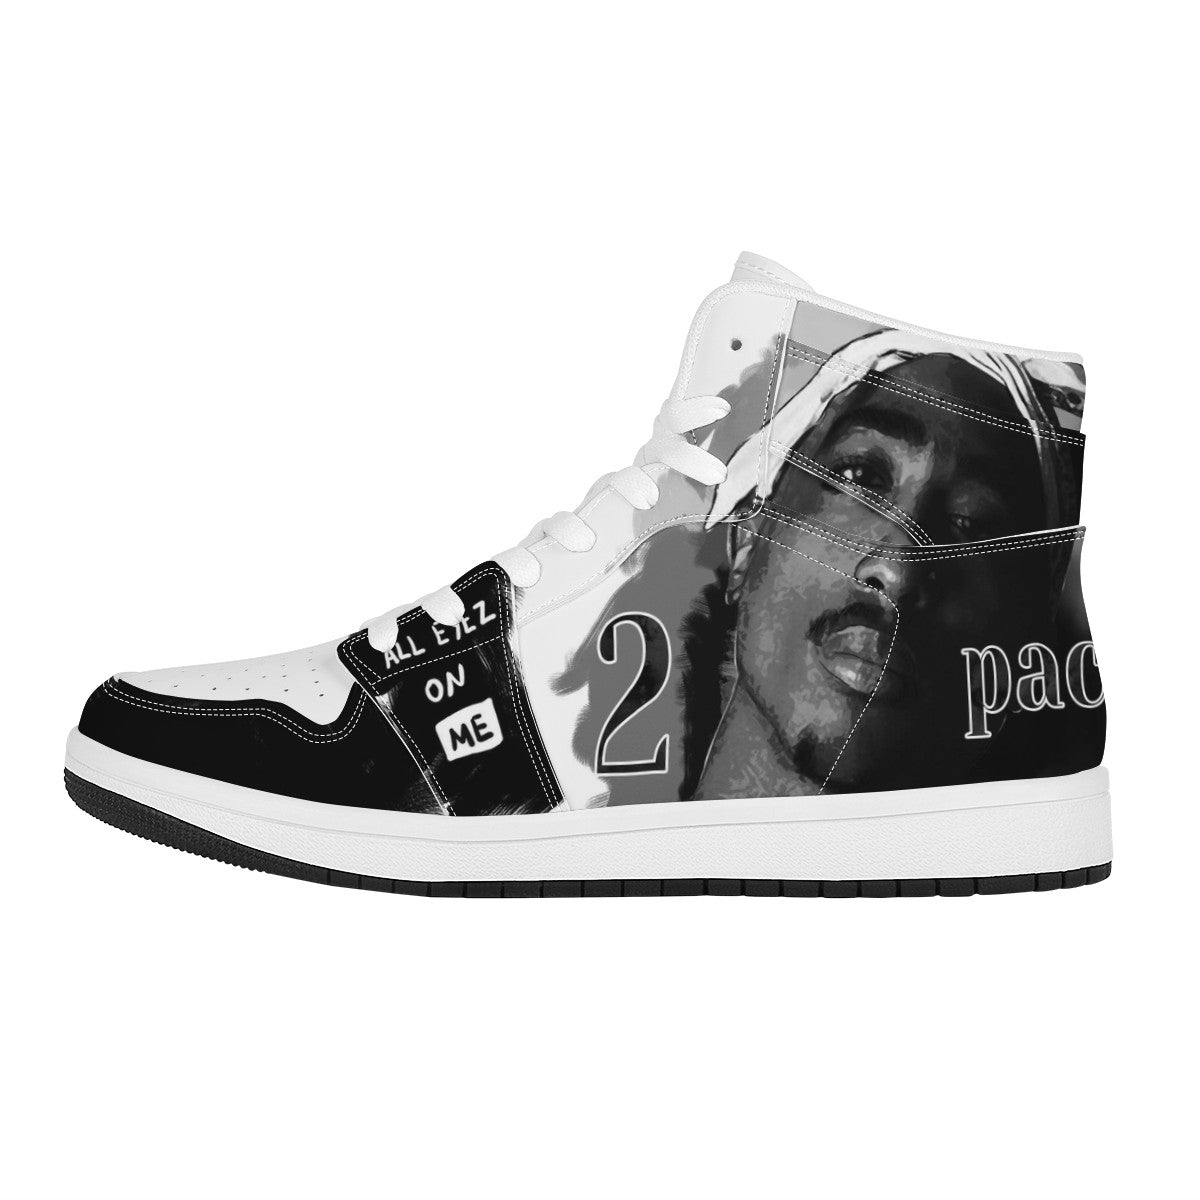 Tupac Shakur Custom Nike Air Jordan 1 Leather Sneaker